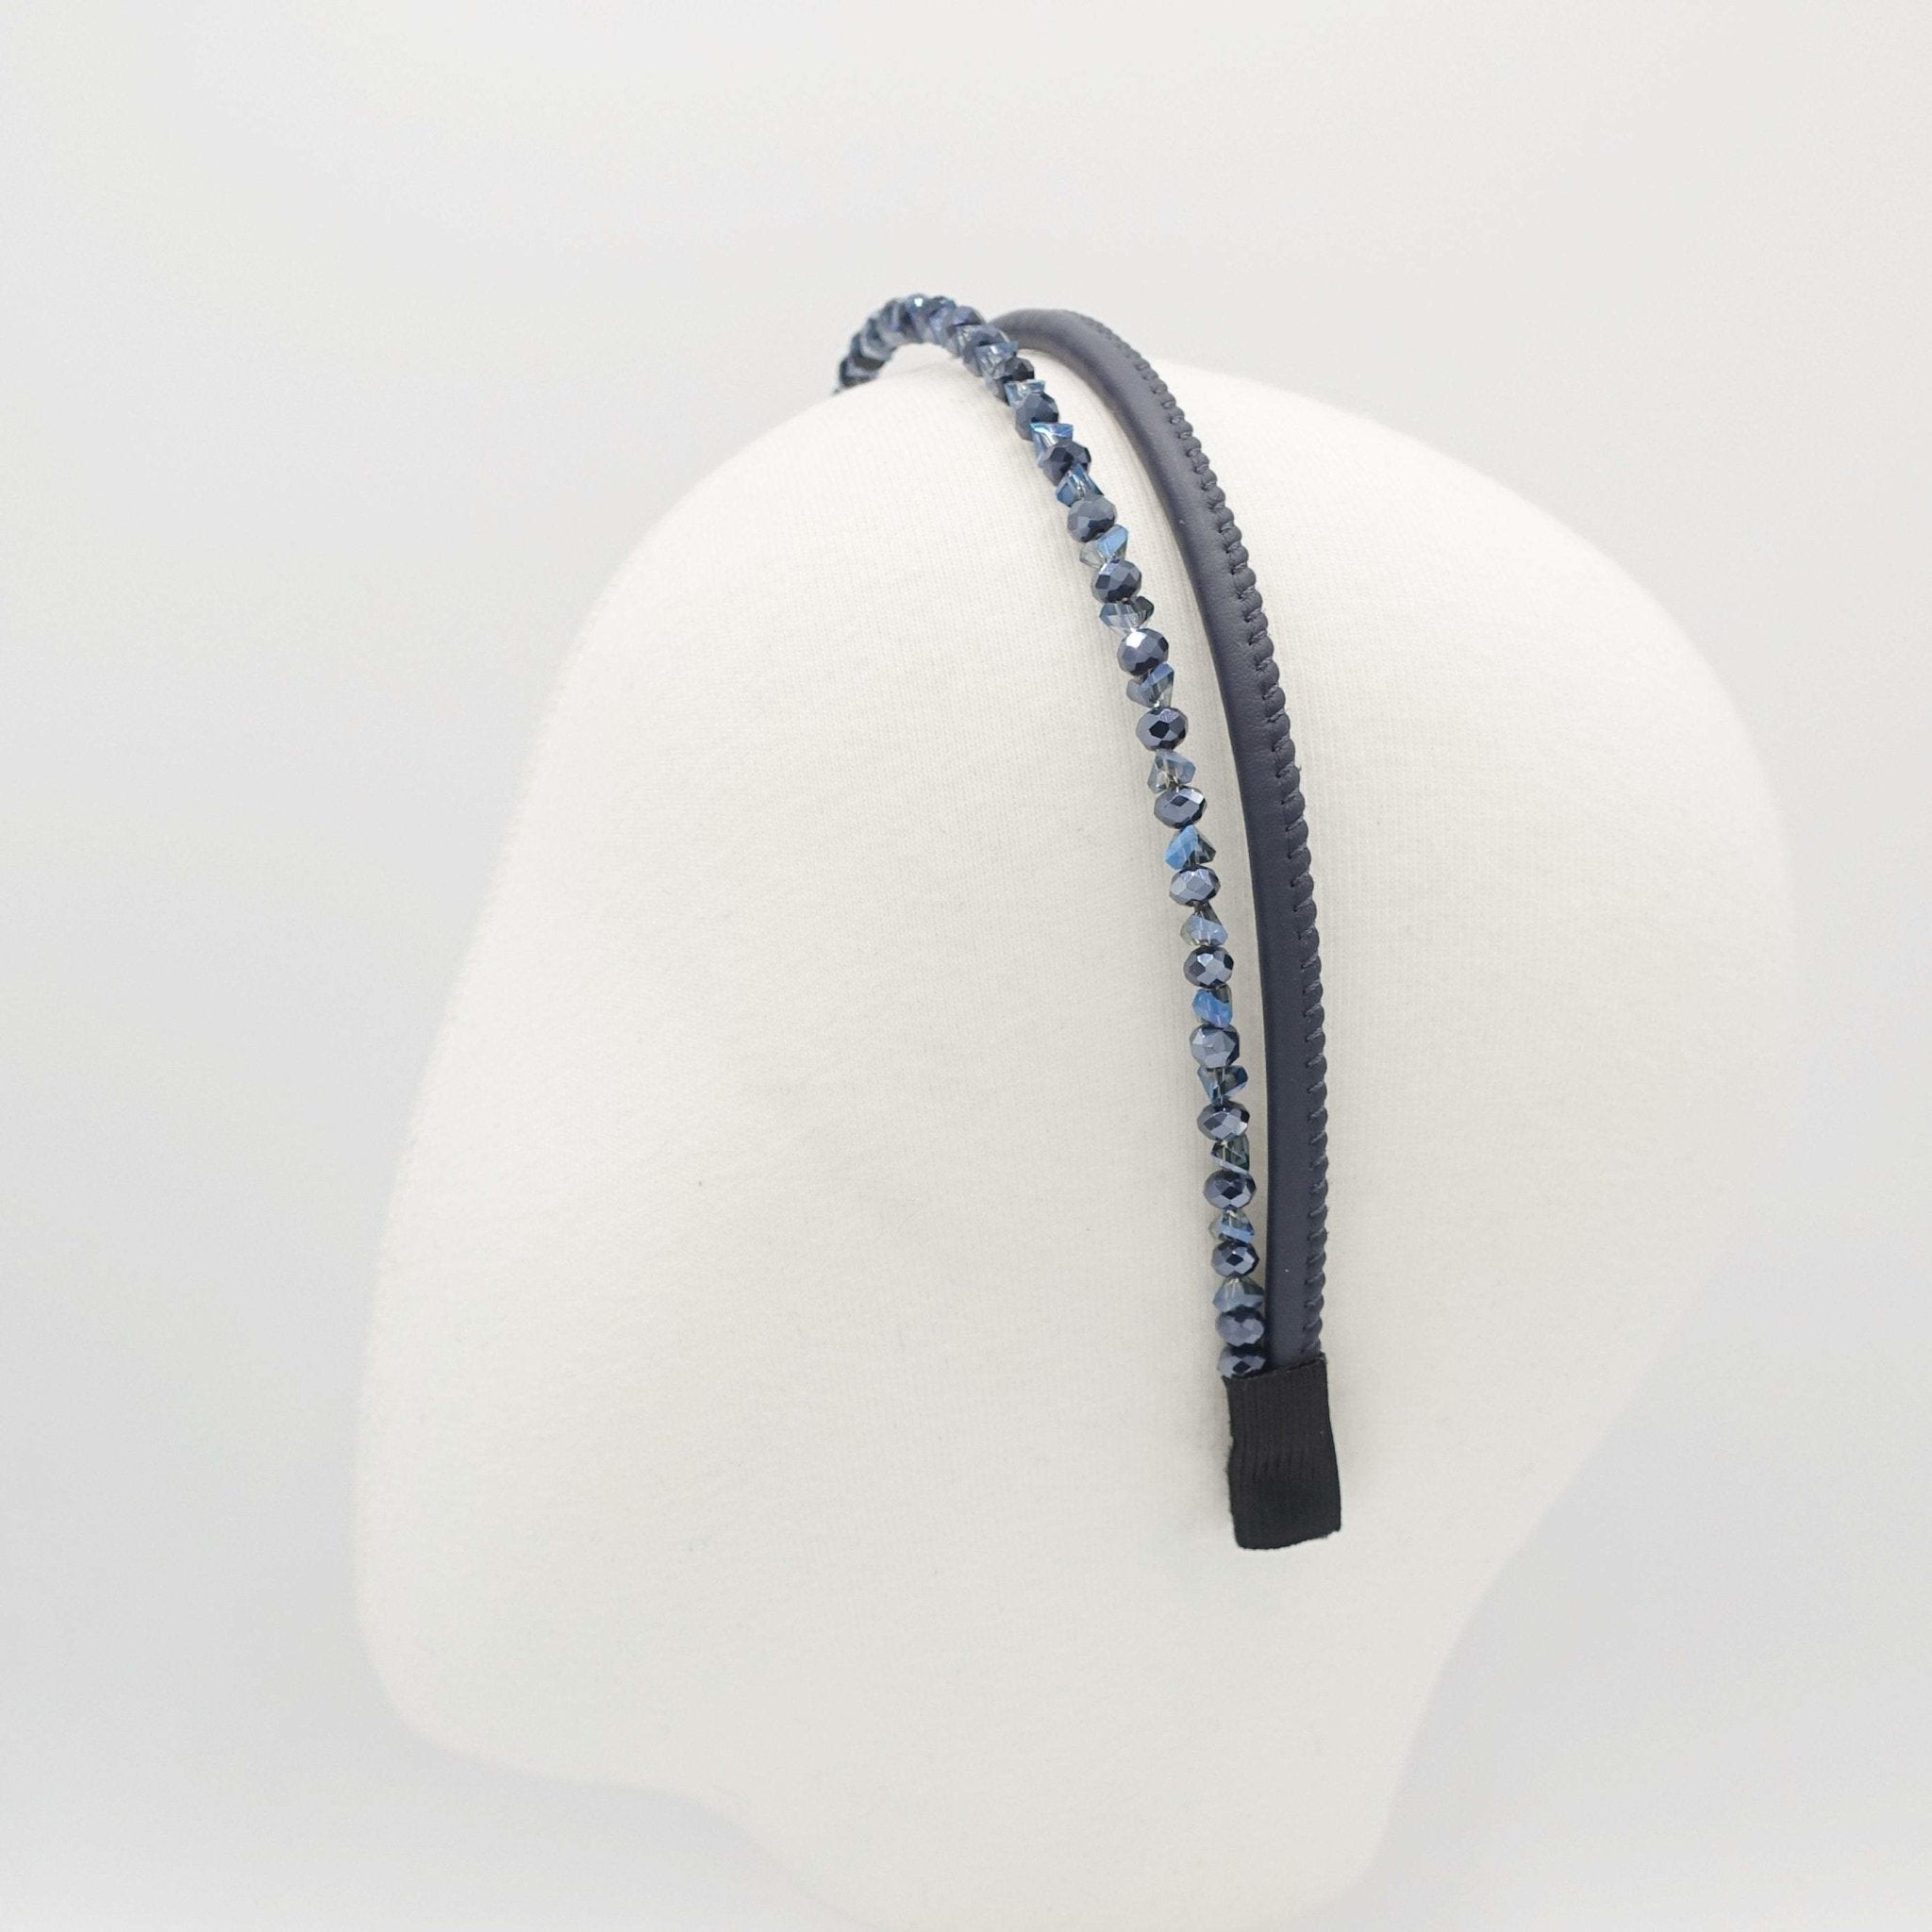 VeryShine Headband Navy double strand headband bling glass beaded leather hairband for women